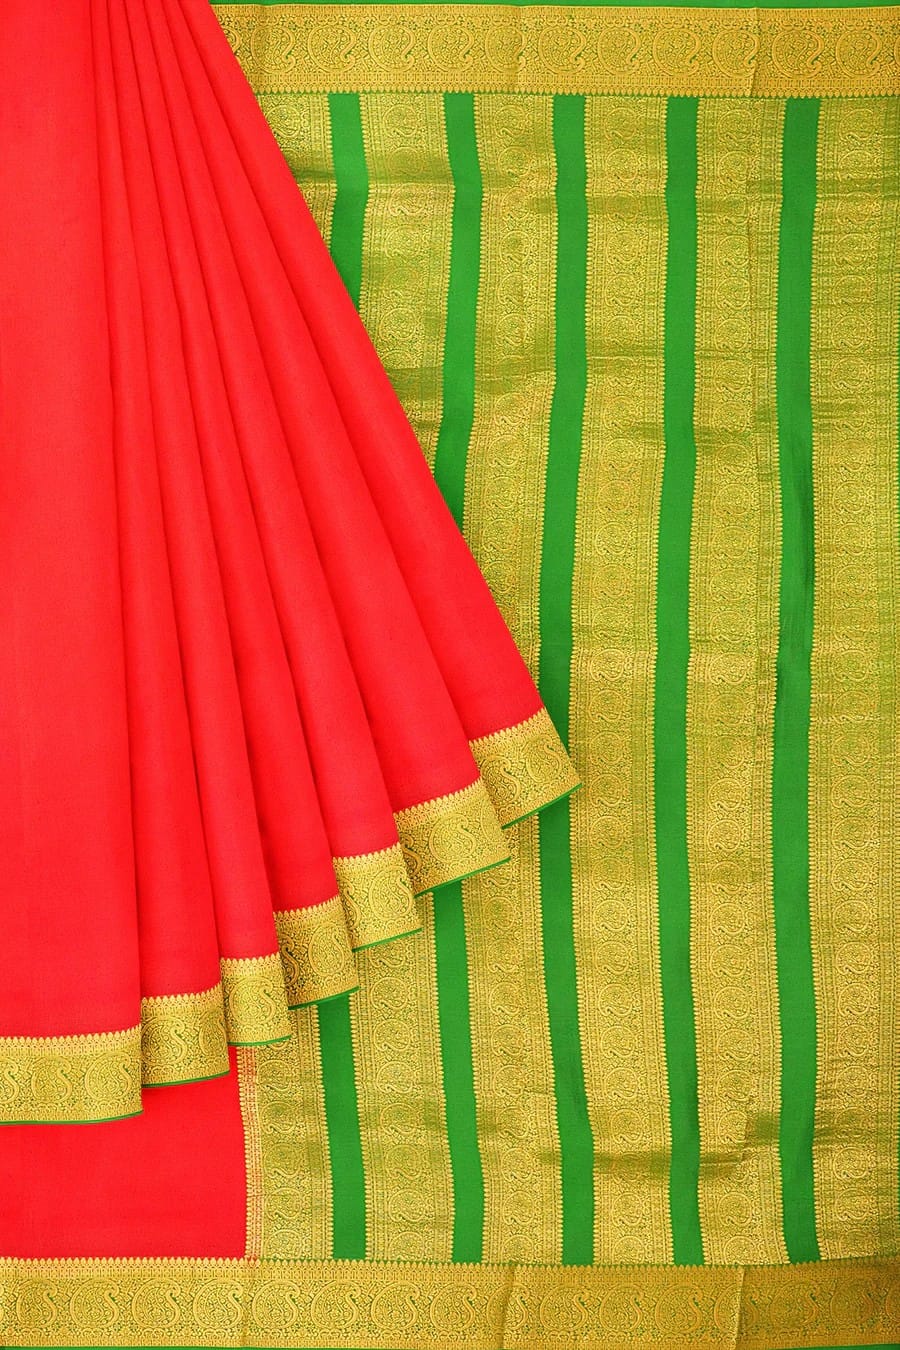 The history of Mysore silk sarees